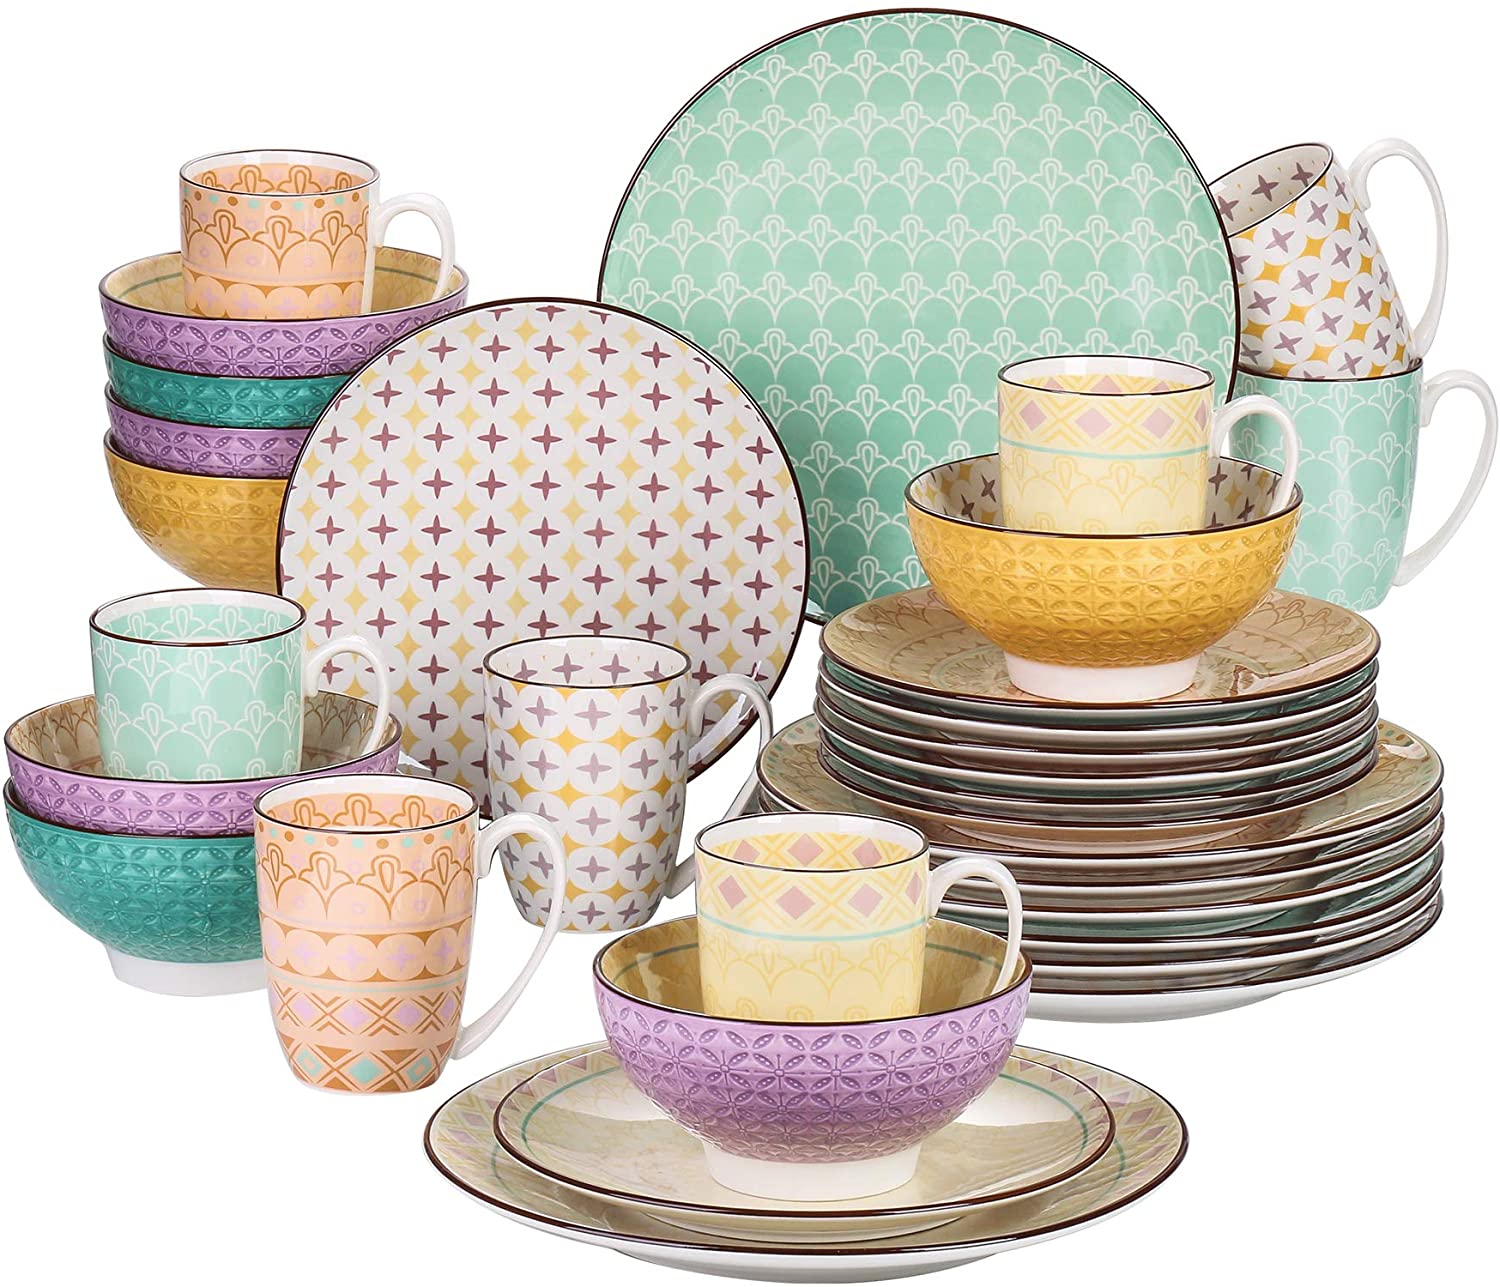 Vancasso Porcelain Crockery Set, Tulip Dinner Service, Table Service, Colourful Tableware for 4-12 People